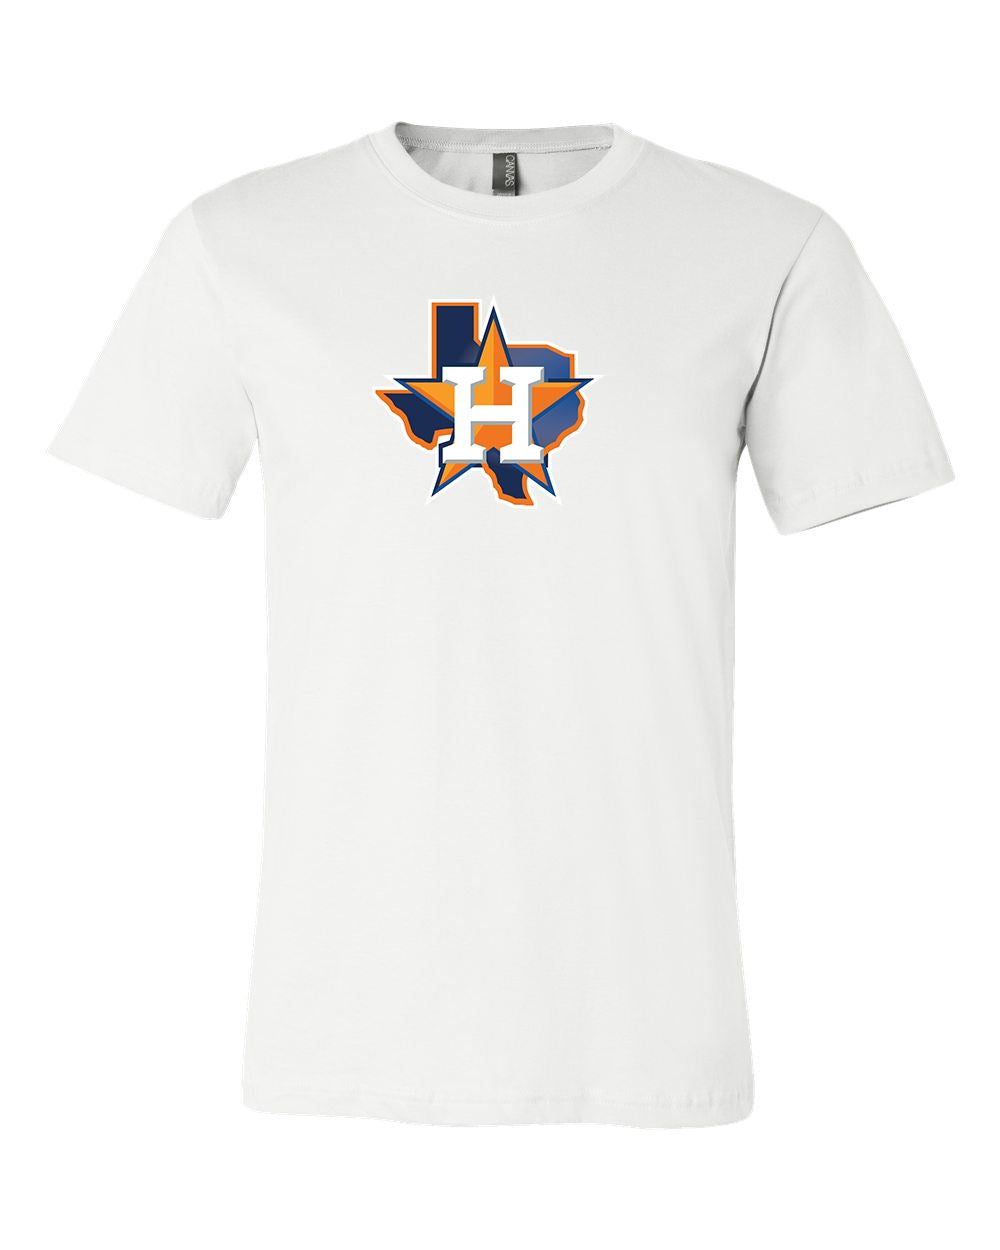 Alex Bregman Houston Astros Men's Backer T-Shirt - Ash